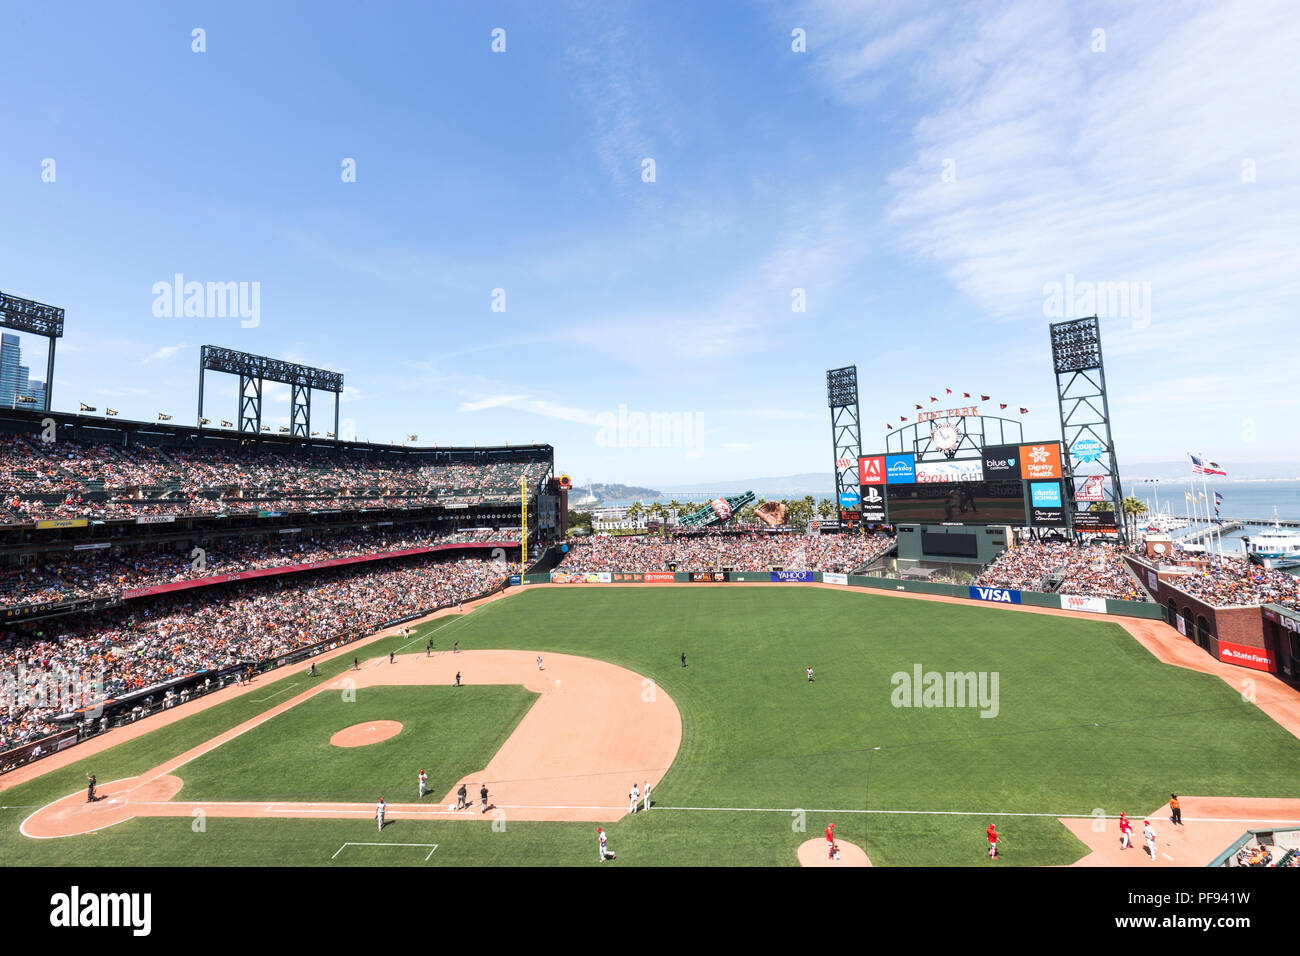 AT&T Park Baseball Stadium, San Francisco, USA, Heimat der San Francisco Giants, der Stadt der Major League Baseball Franchise. Stockfoto